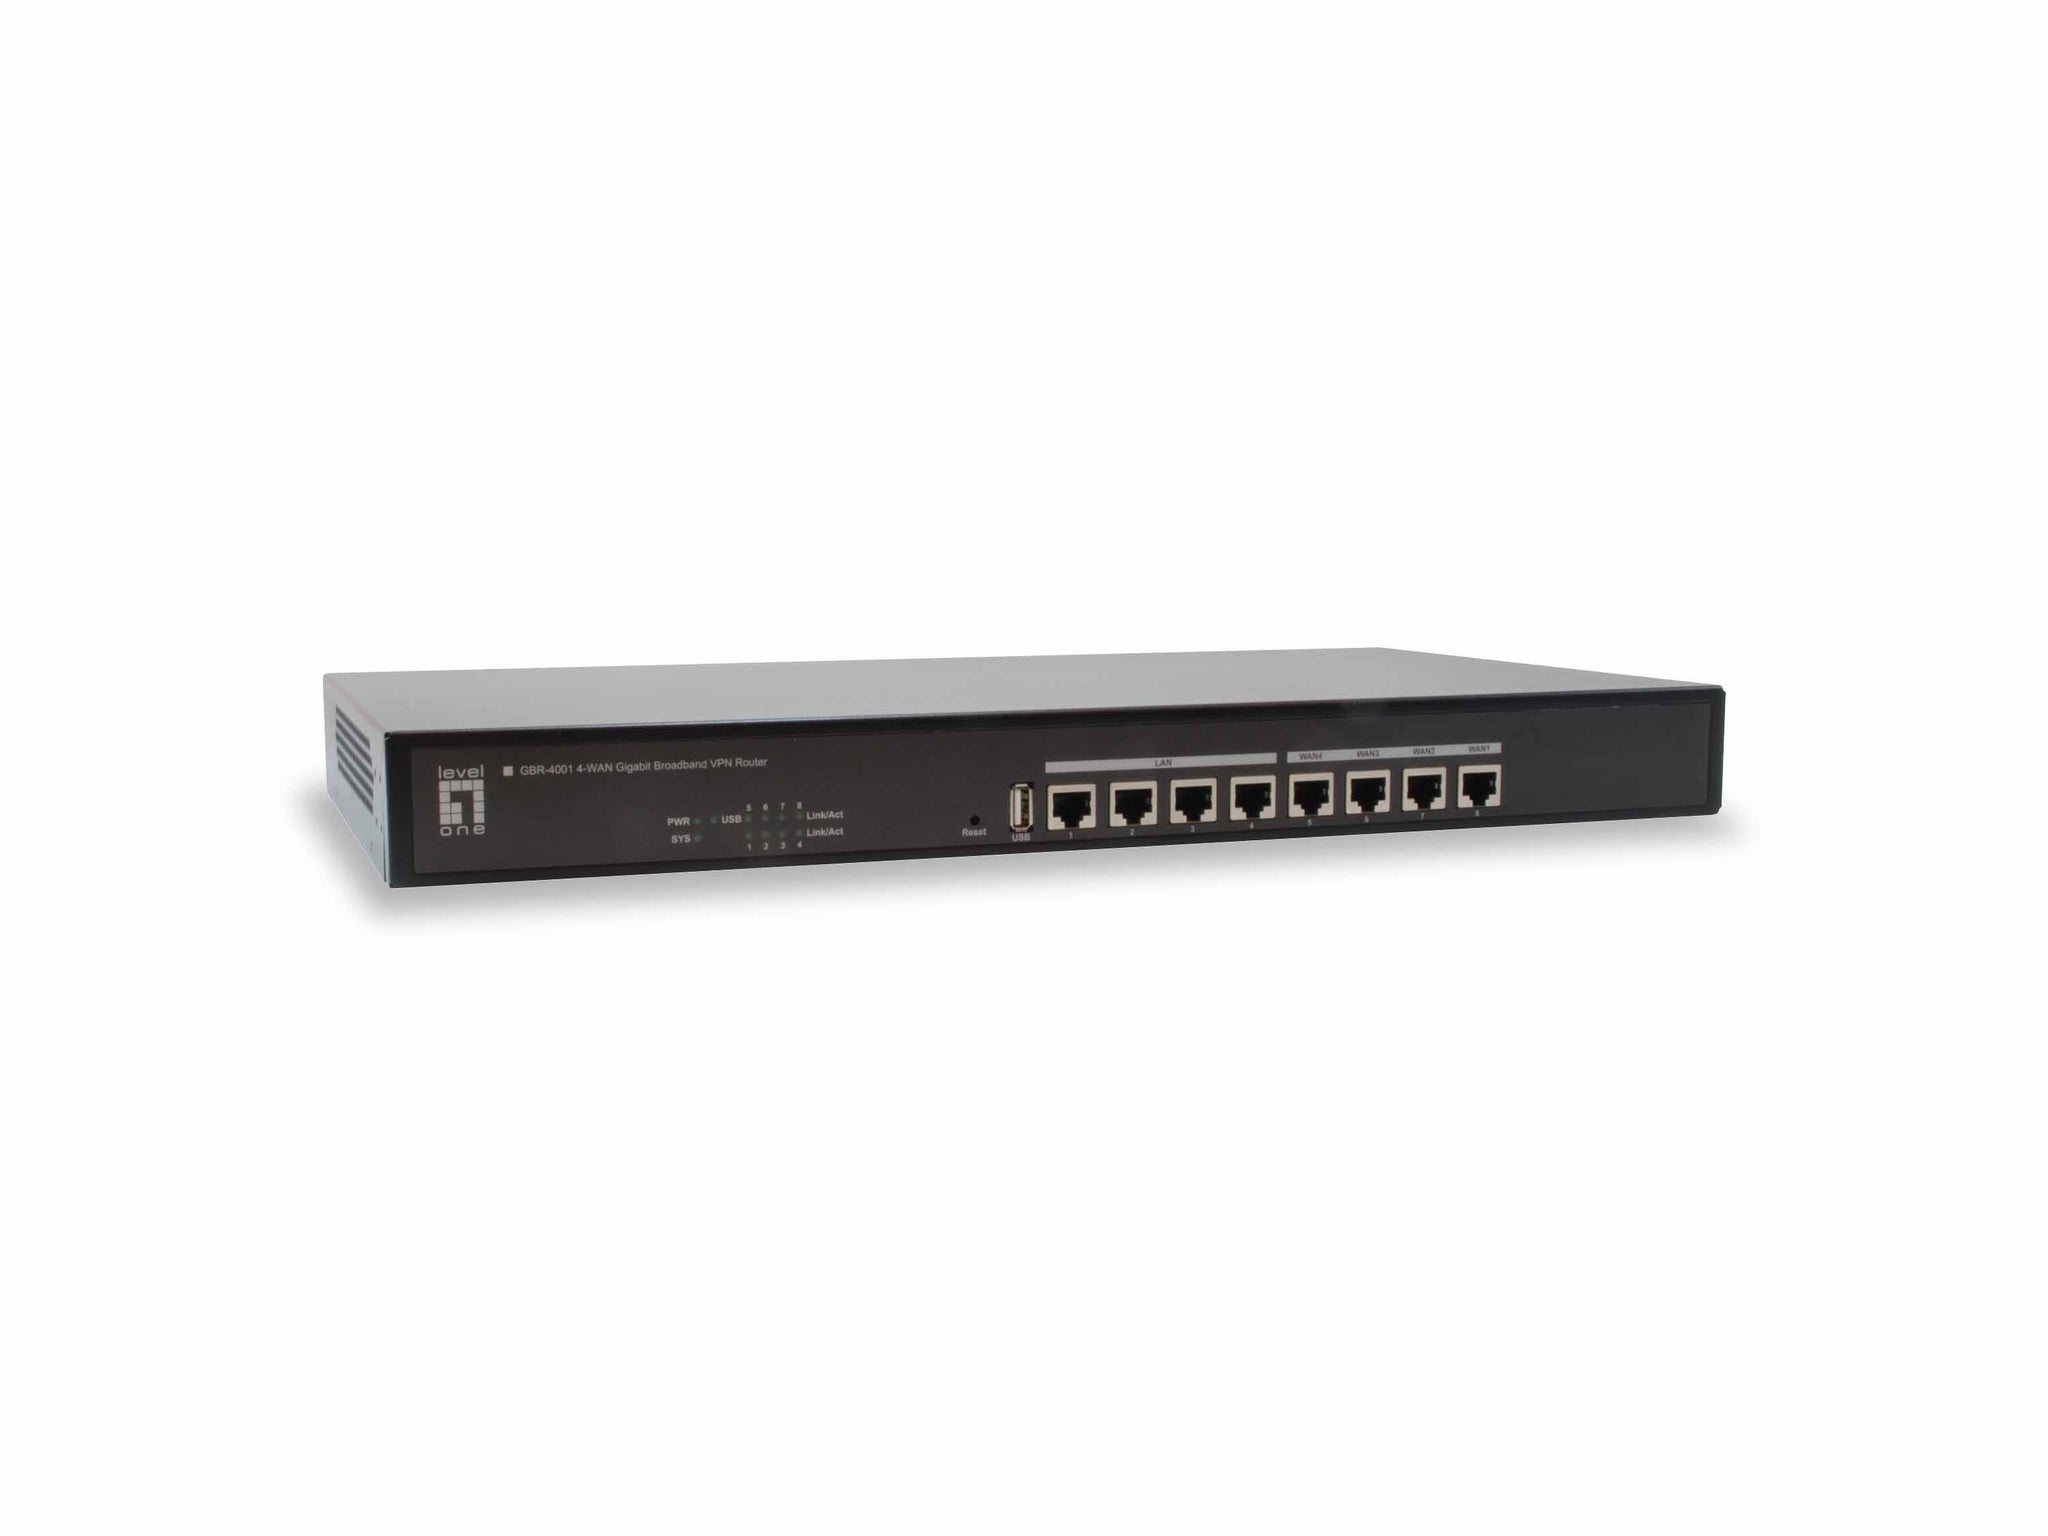 GBR-4001 Multi-WAN Gigabit VPN Router, Quad WAN